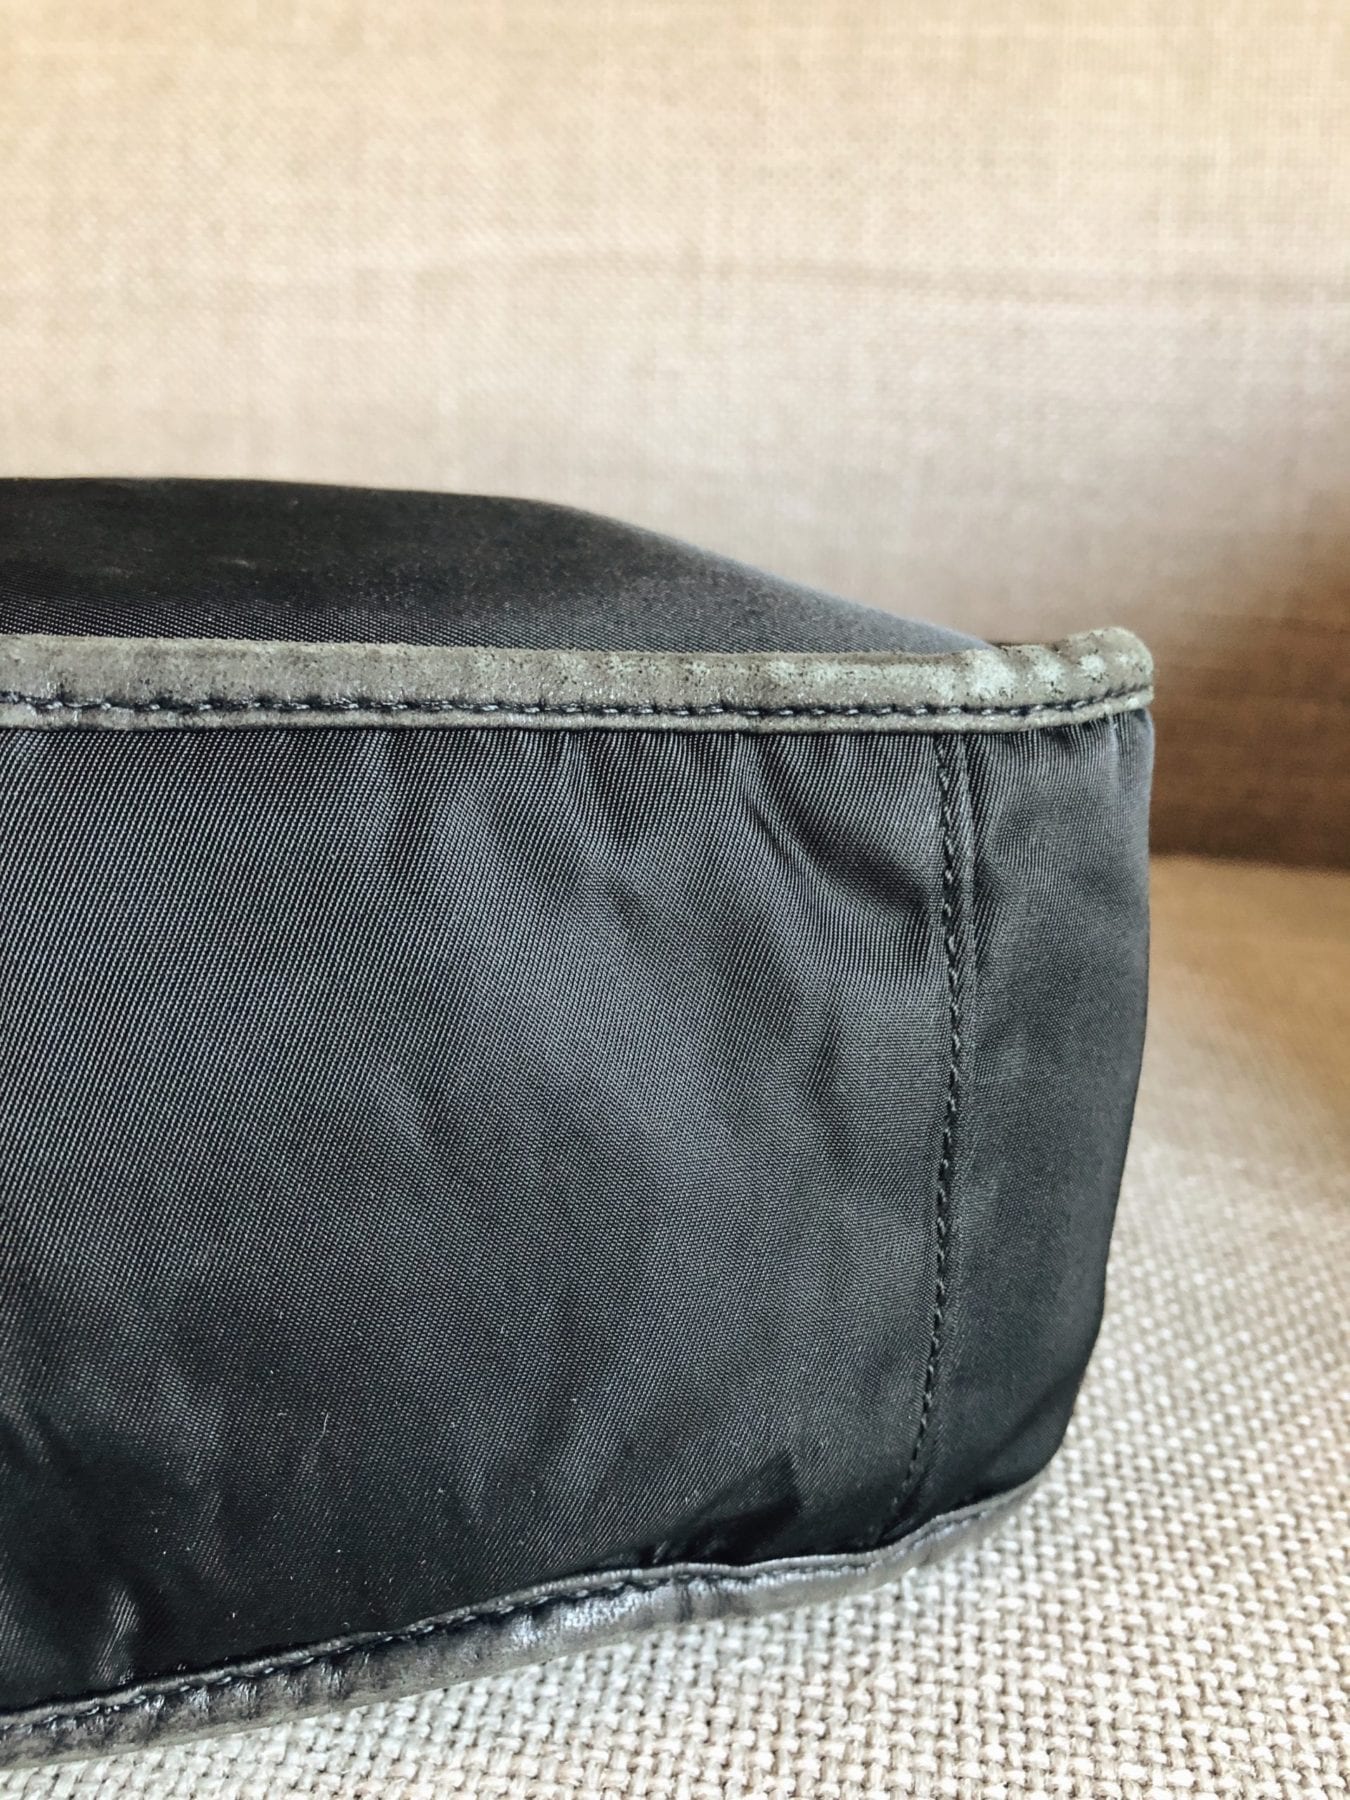 Prada Nylon Black Shoulder Bag